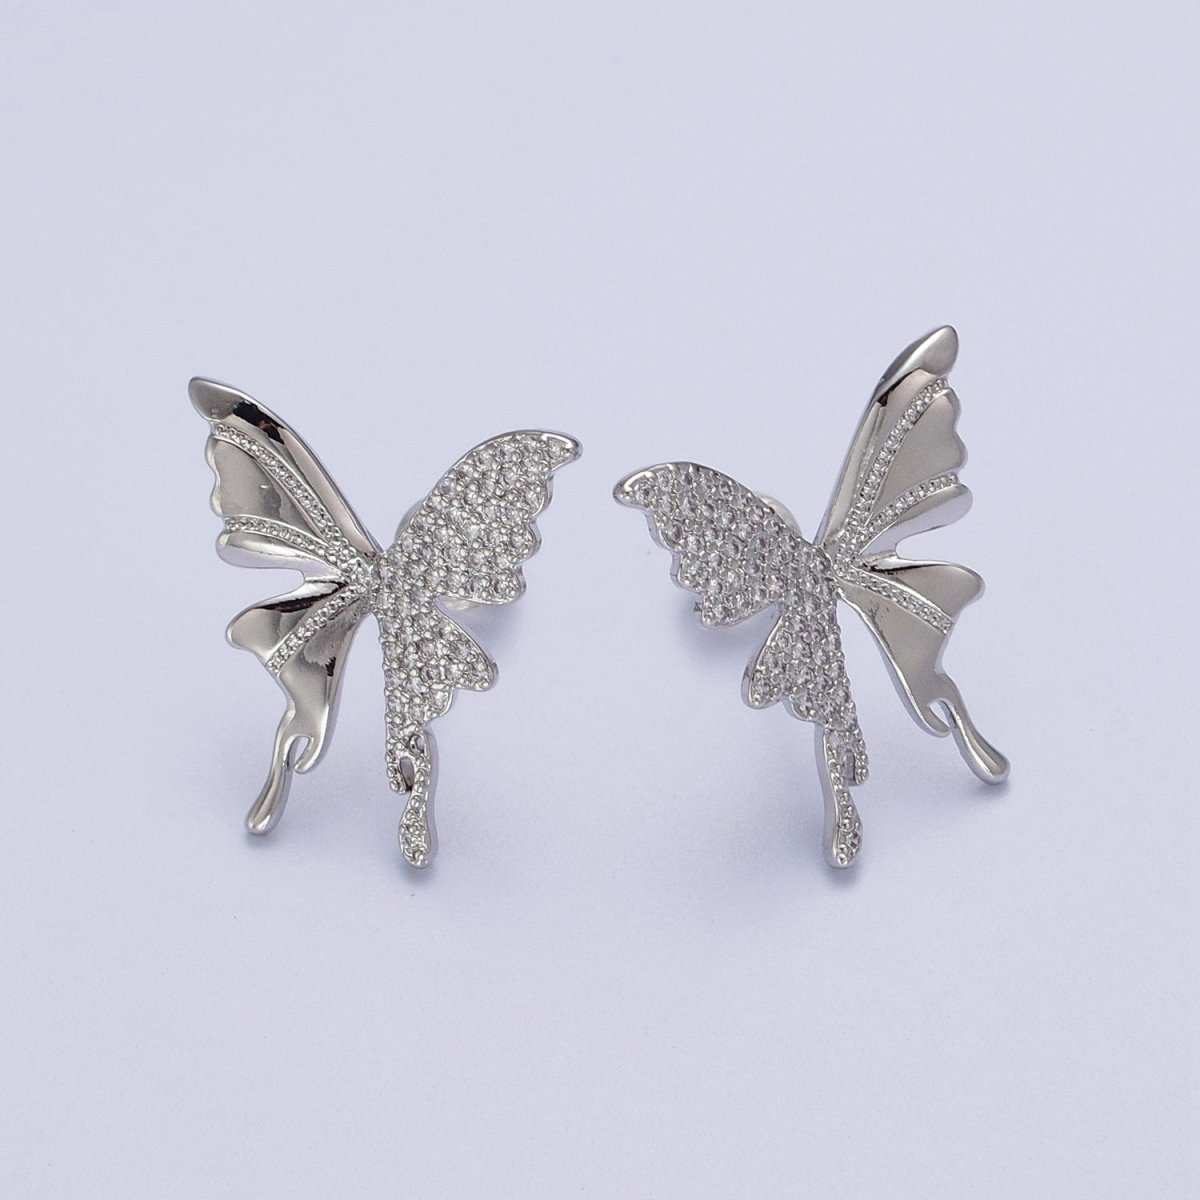 Micro Paved Butterfly Wings Gold, Silver Stud Earrings | Y-197 Y-198 - DLUXCA